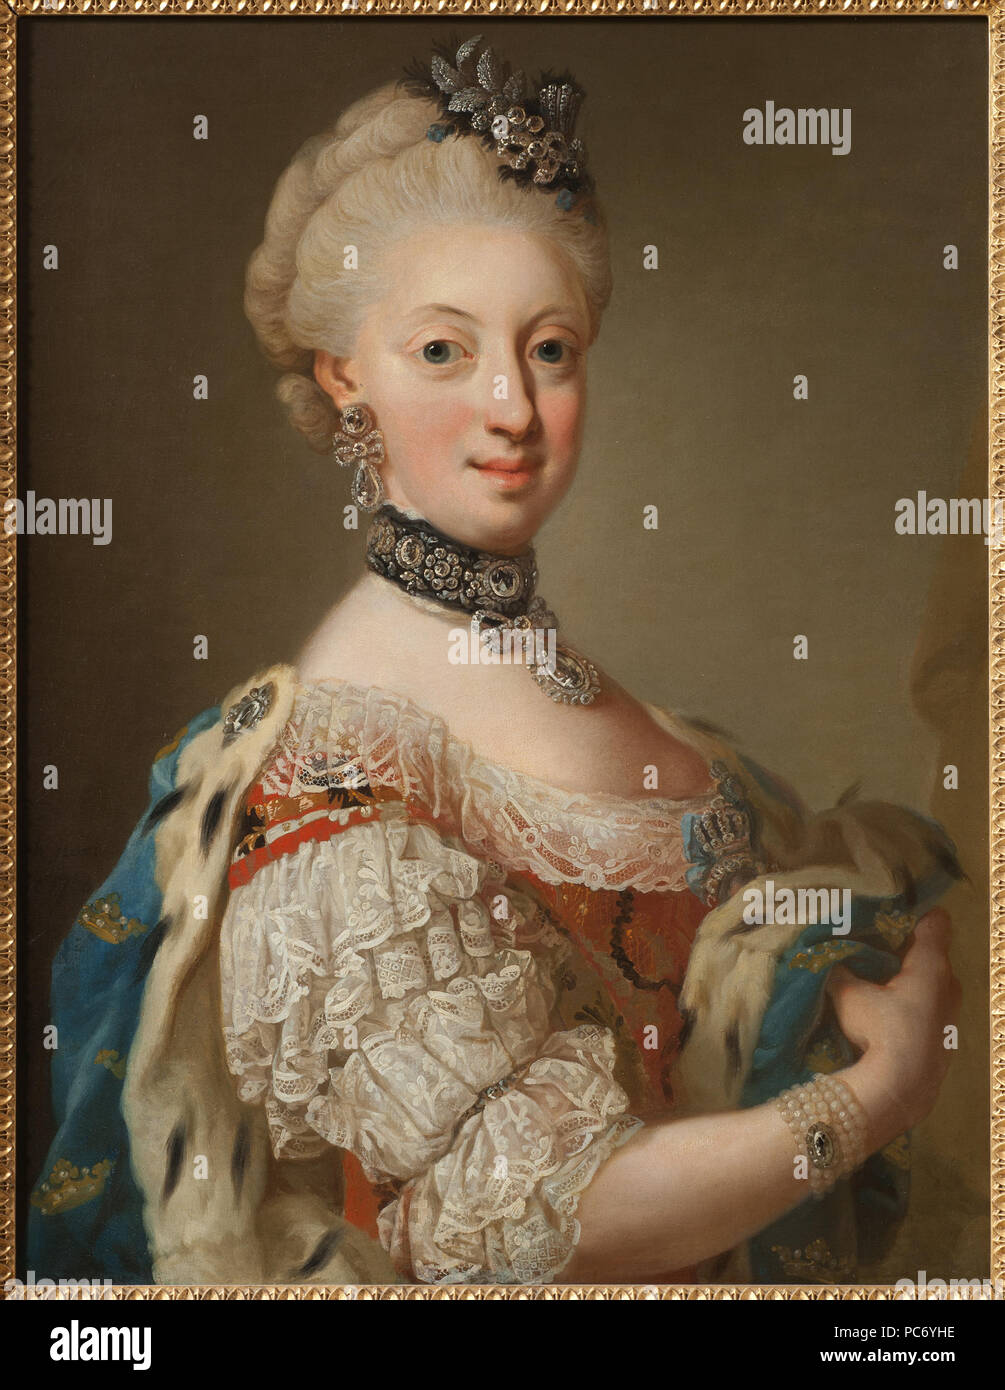 82 Sofia Magdalena, 1746-1813, drottning av Sverige prinsessa av Danmark  (Lorens Pasch d.y.) - Nationalmuseum - 15109 Stock Photo - Alamy